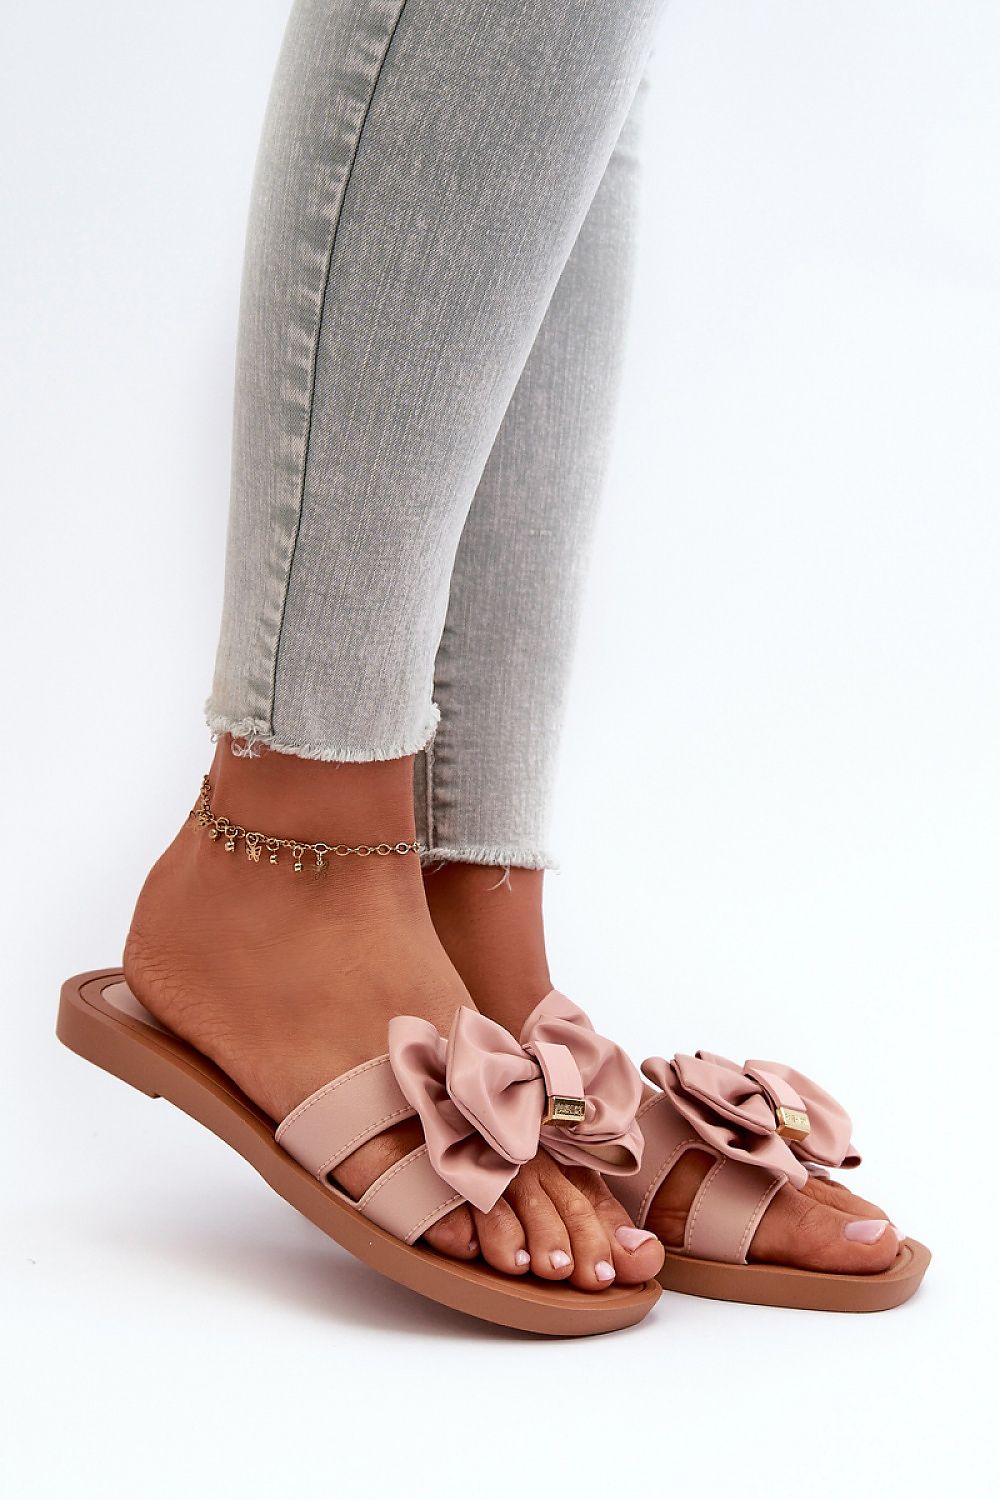 TEEK - Beveled Bow Flat Sandals SHOES TEEK MH pink 6 